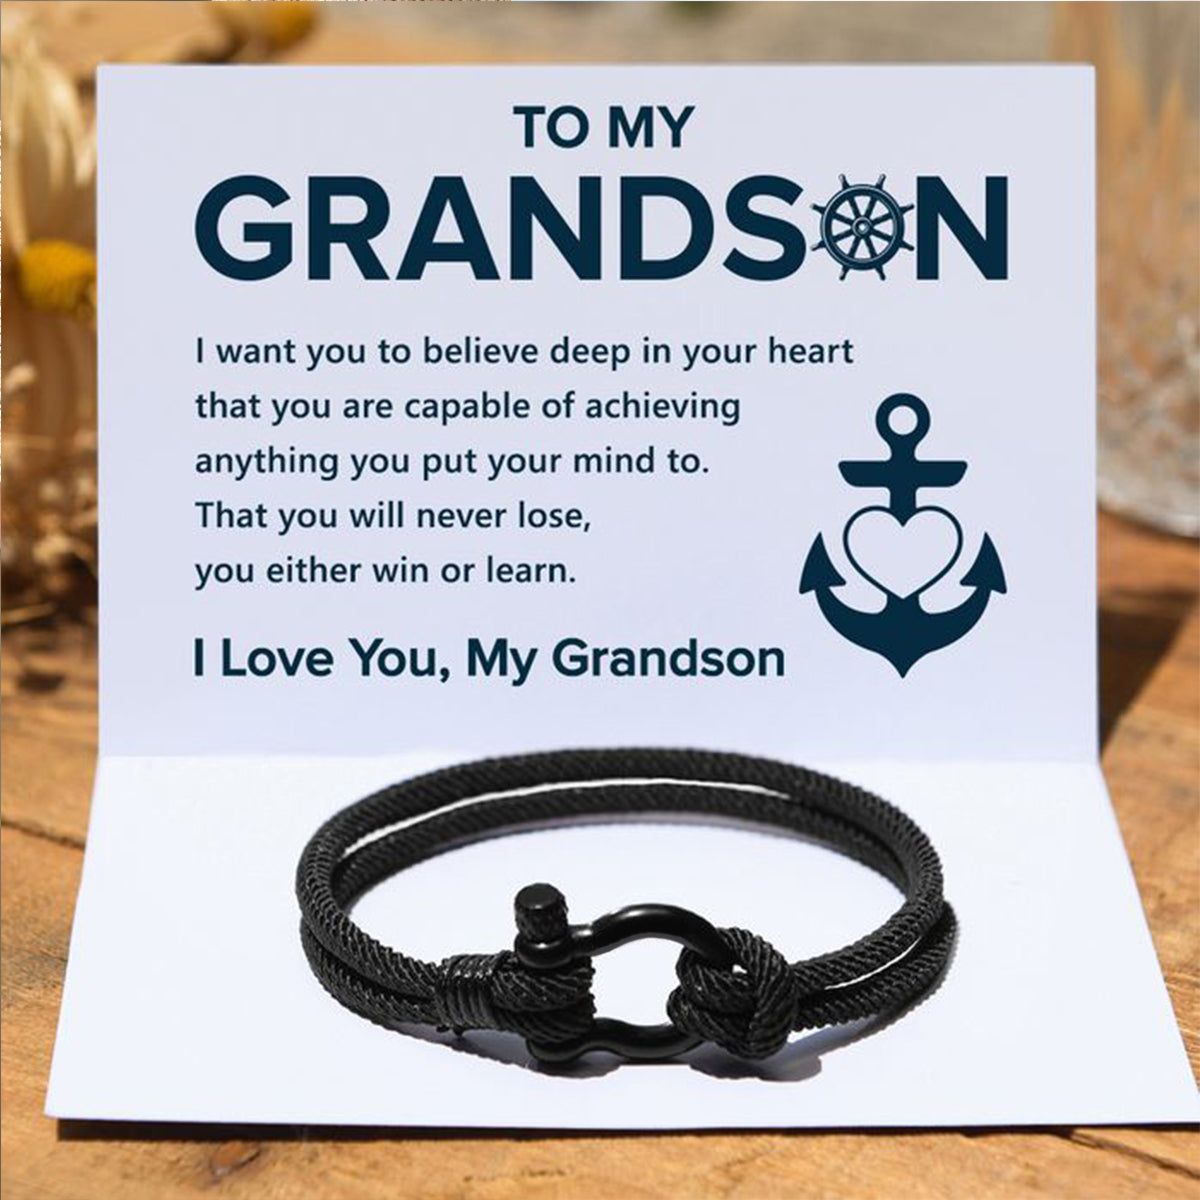 “I Love You, My Grandson” Nautical Bracelet